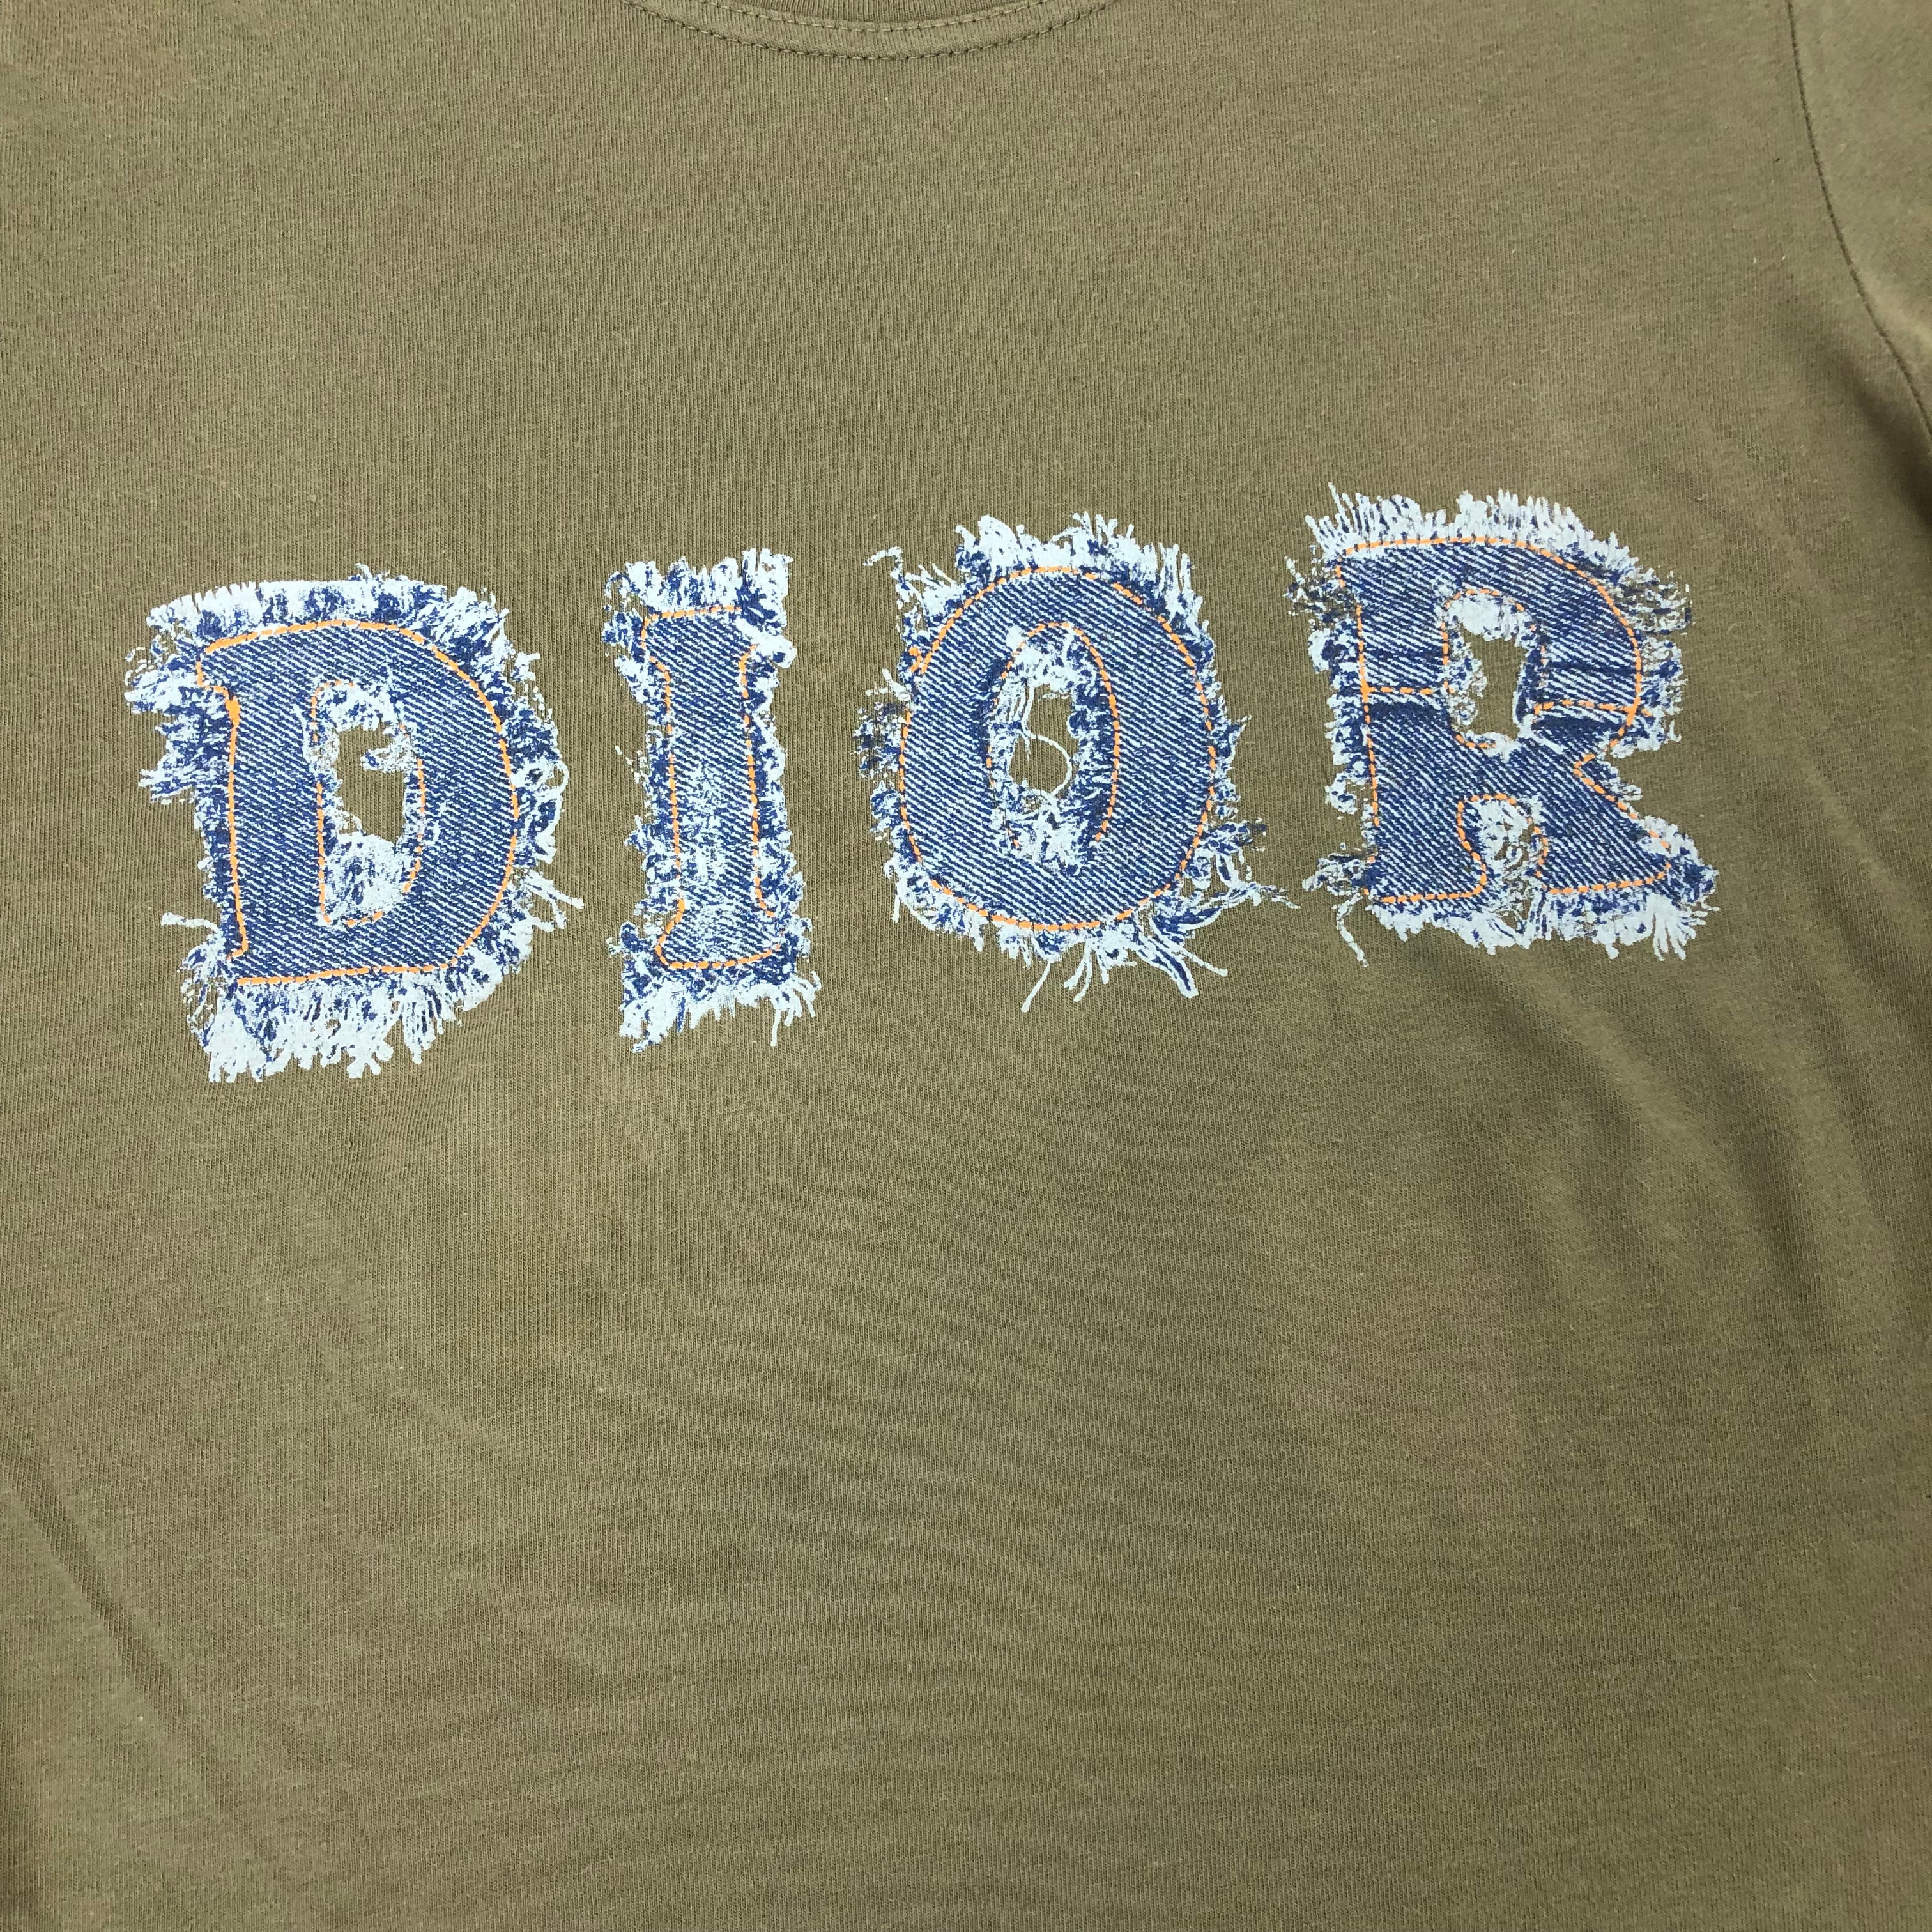 Christian Dior T-Shirt